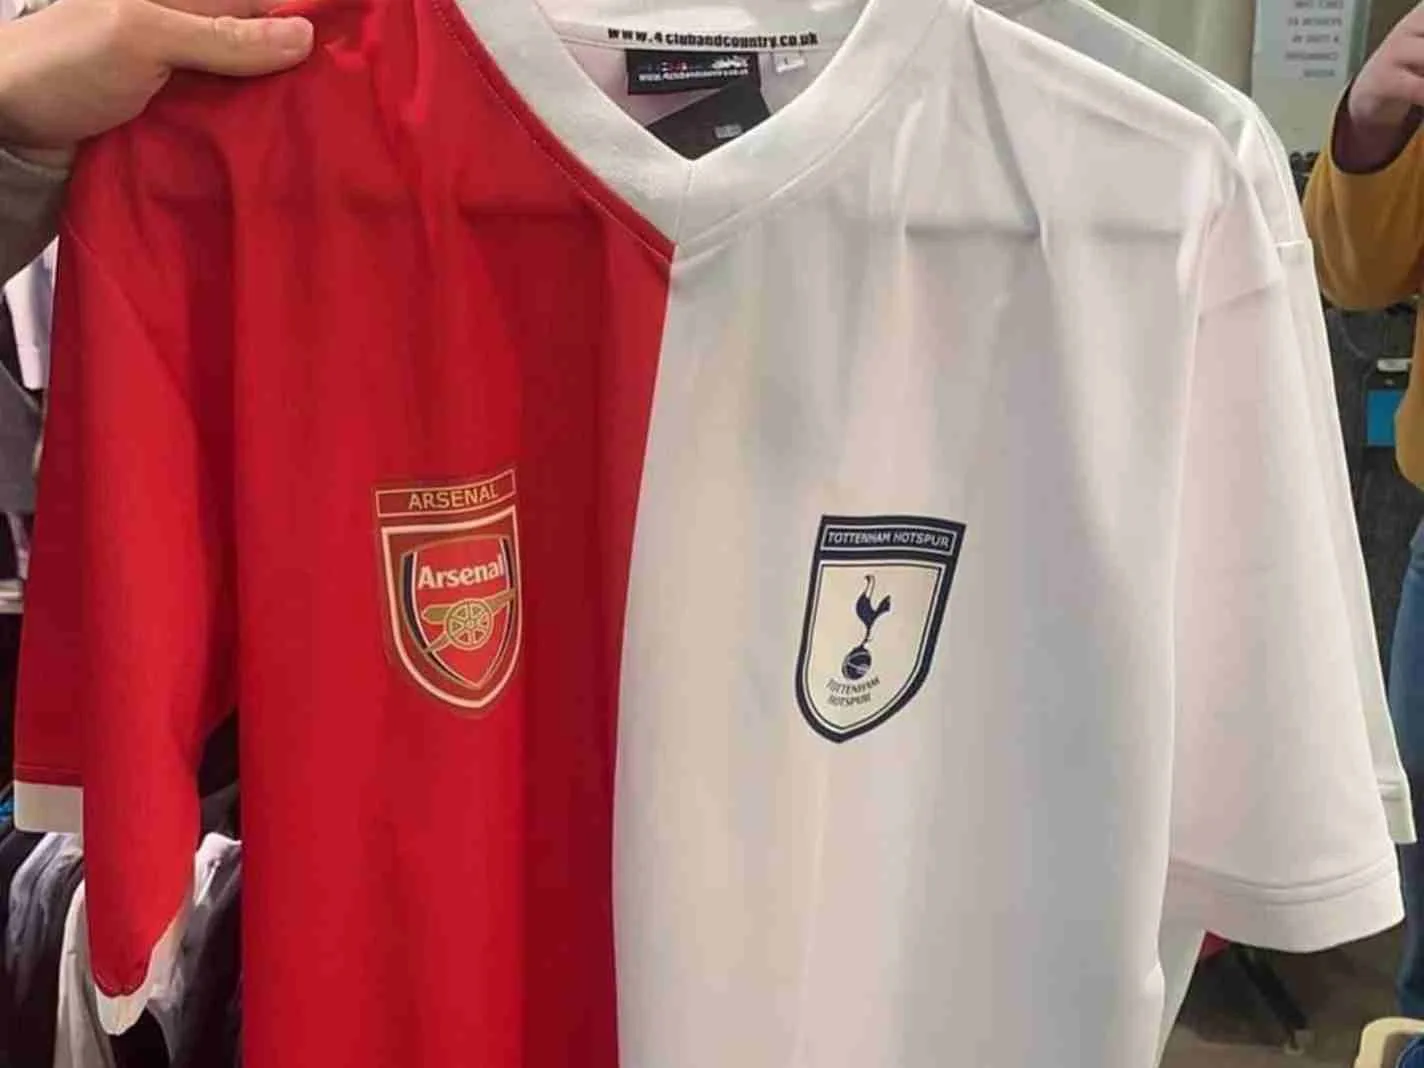 The half-n-half Arsenal and Tottenham kit